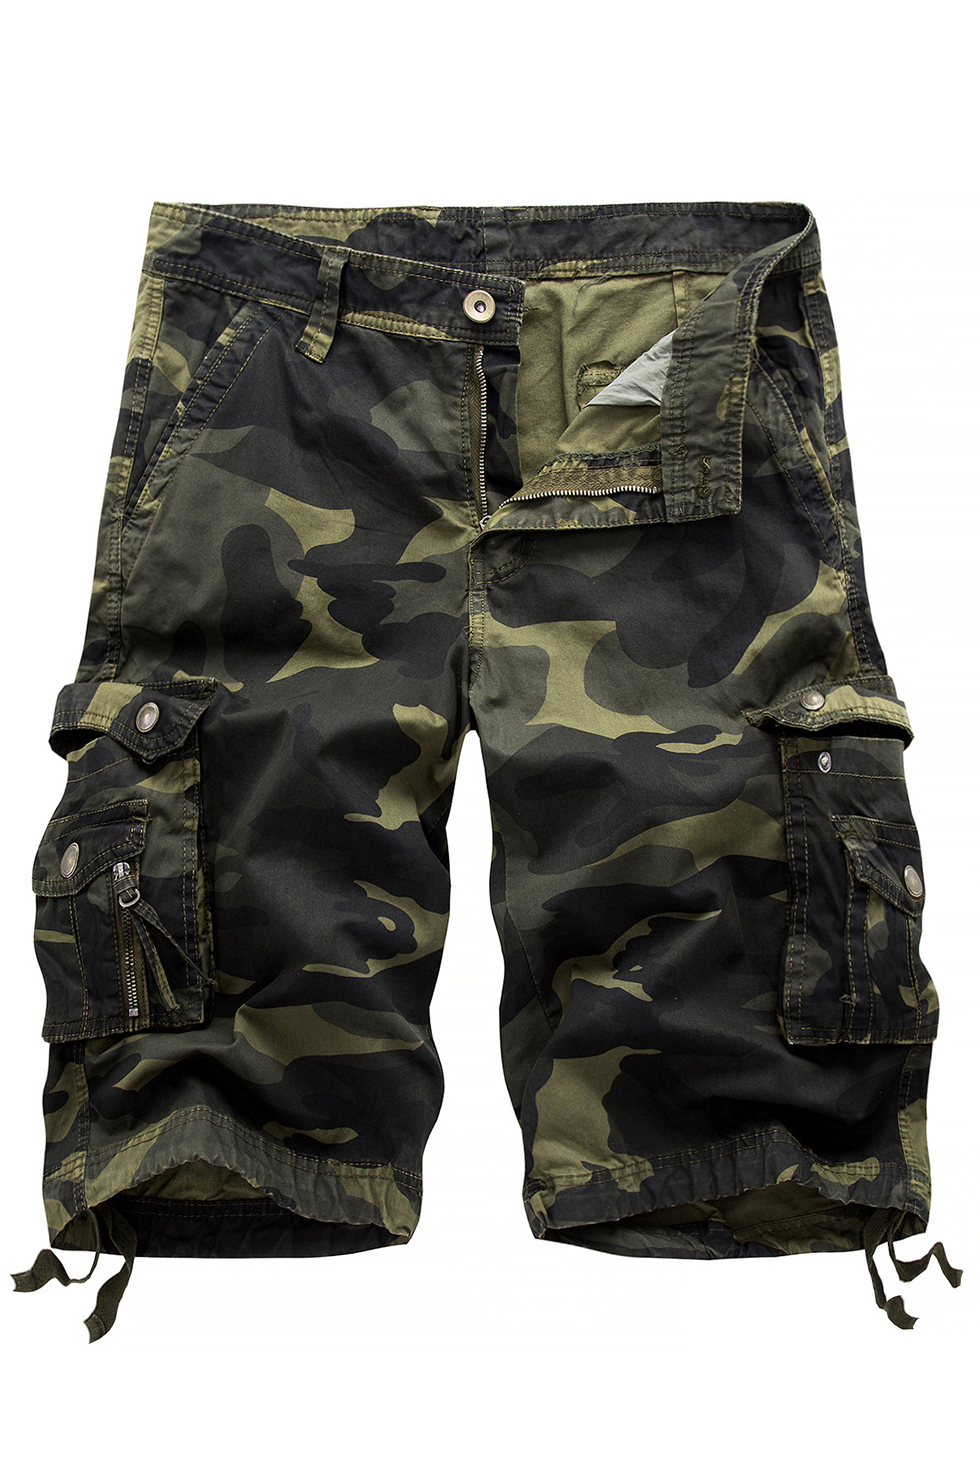 military type cargo pants